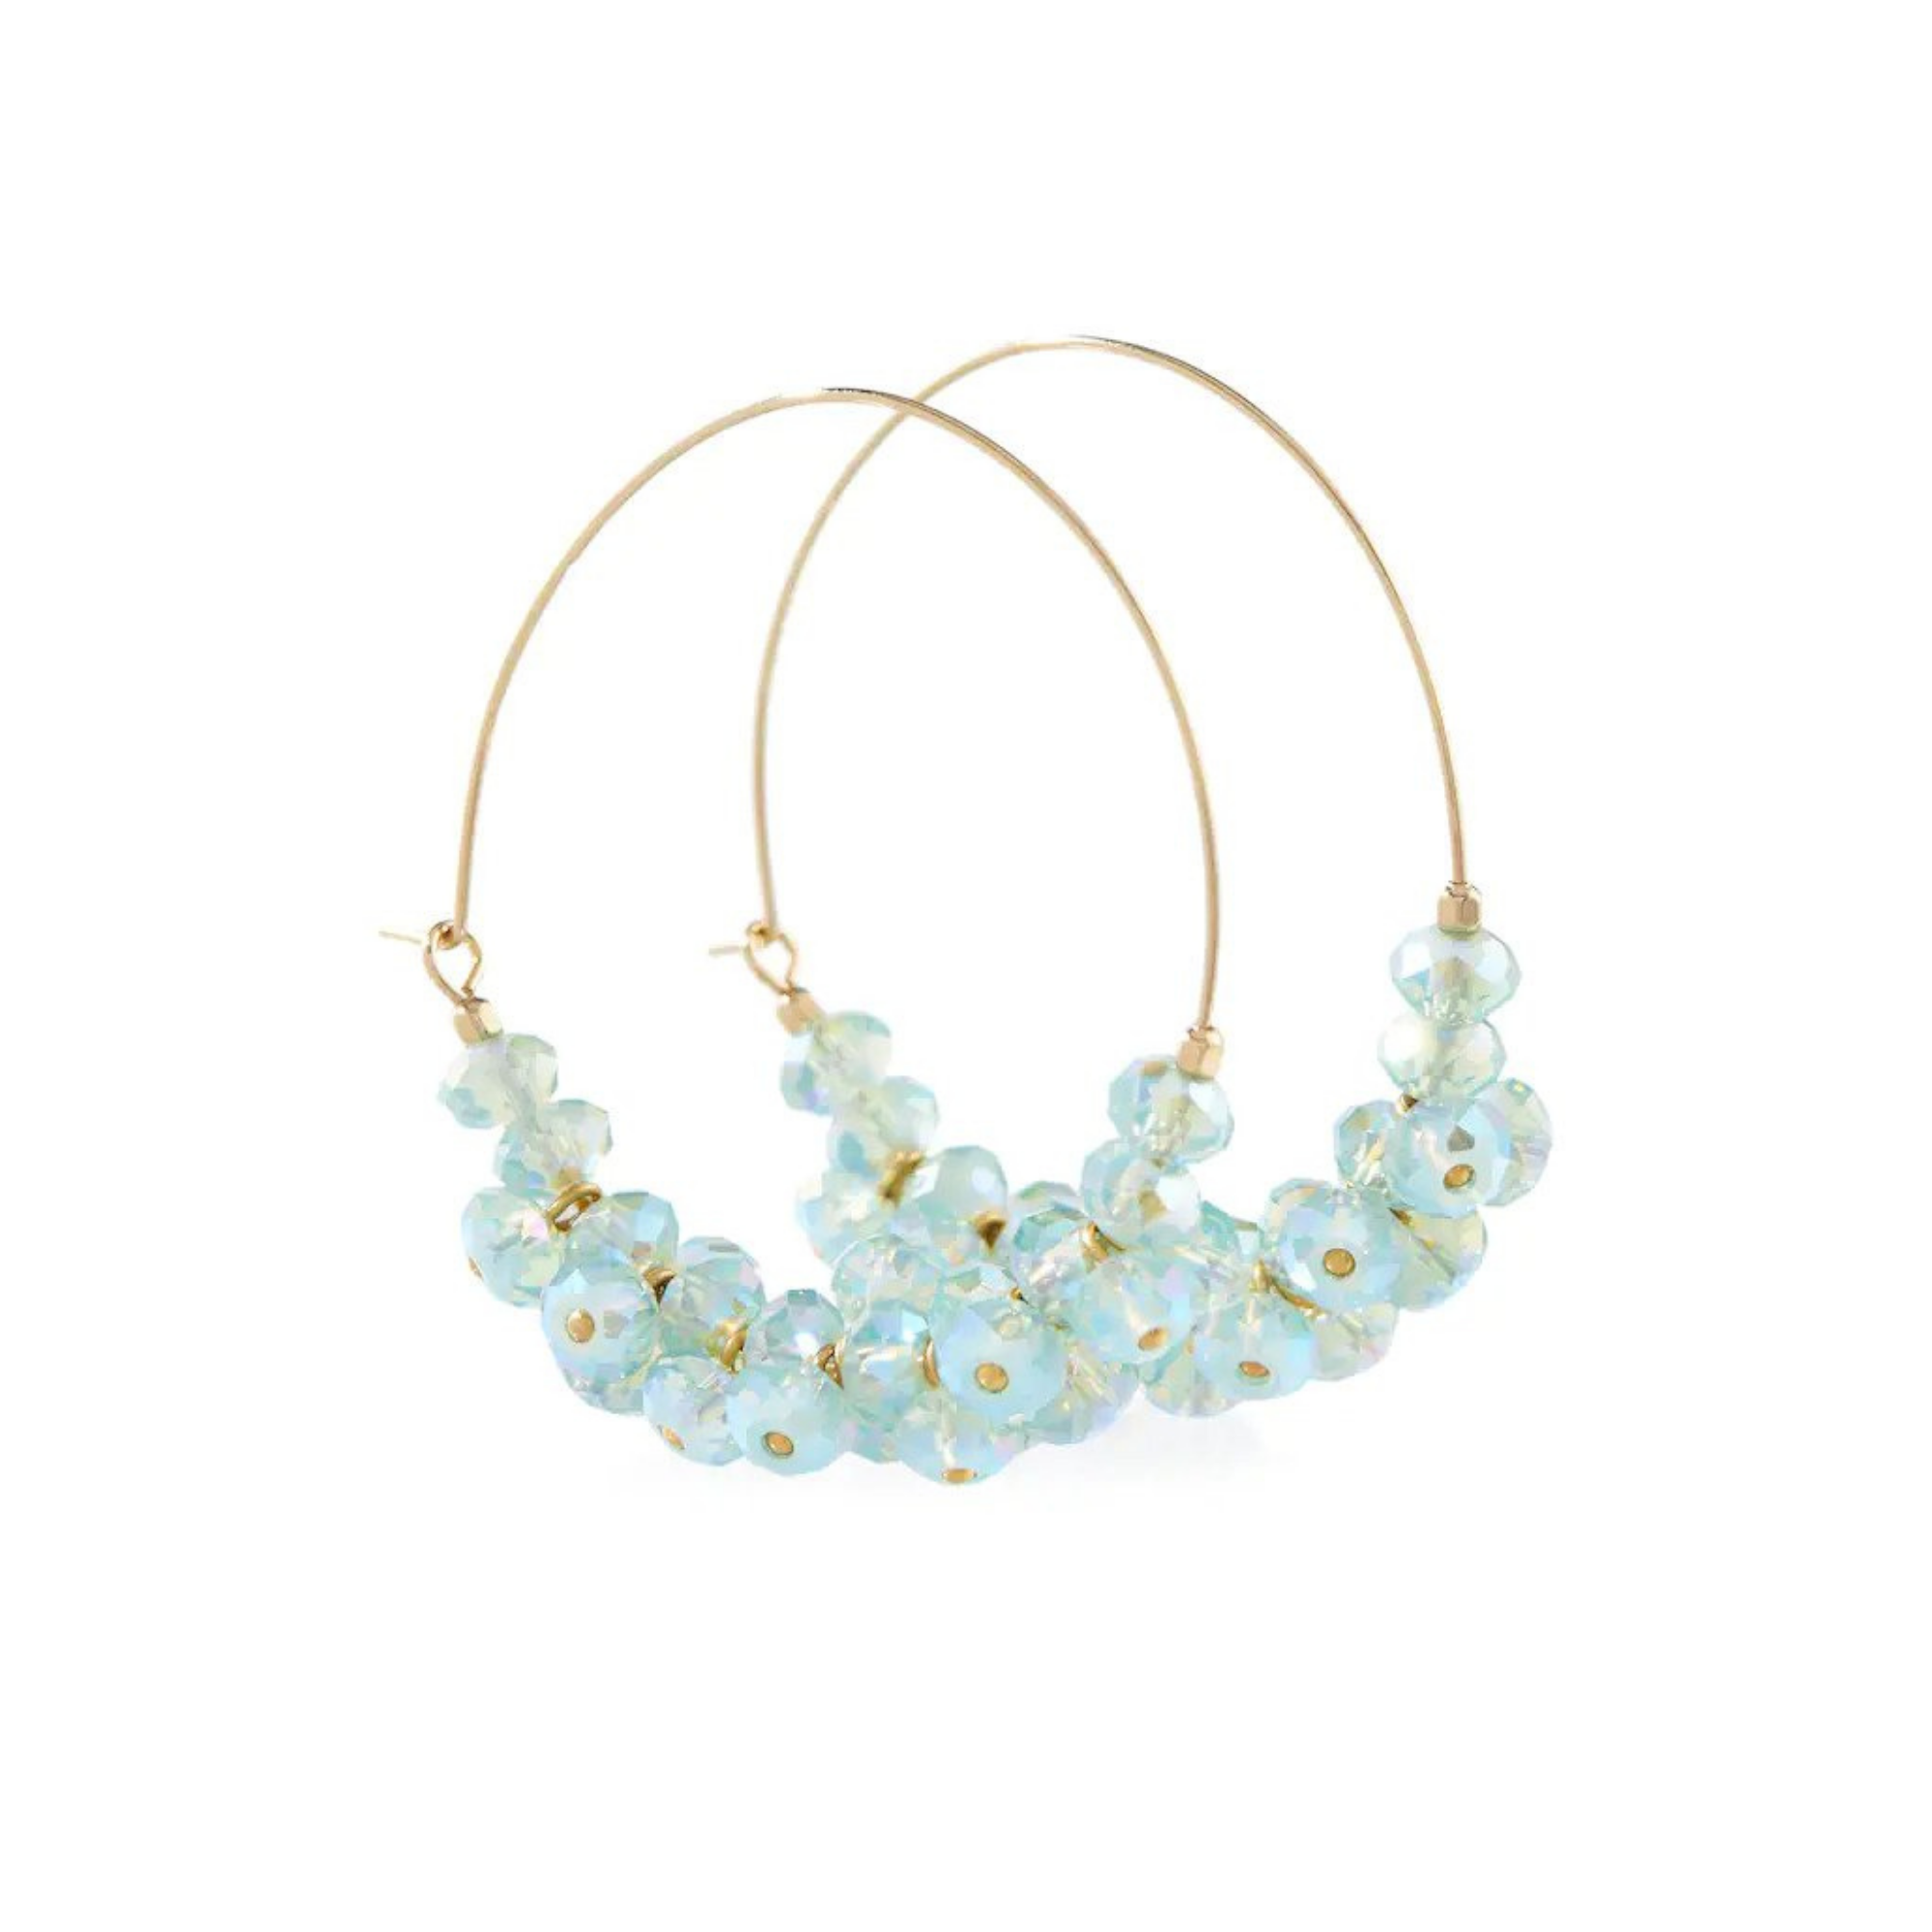 Isabel Marant Embellished Brass Glass Hoop Earrings, $285